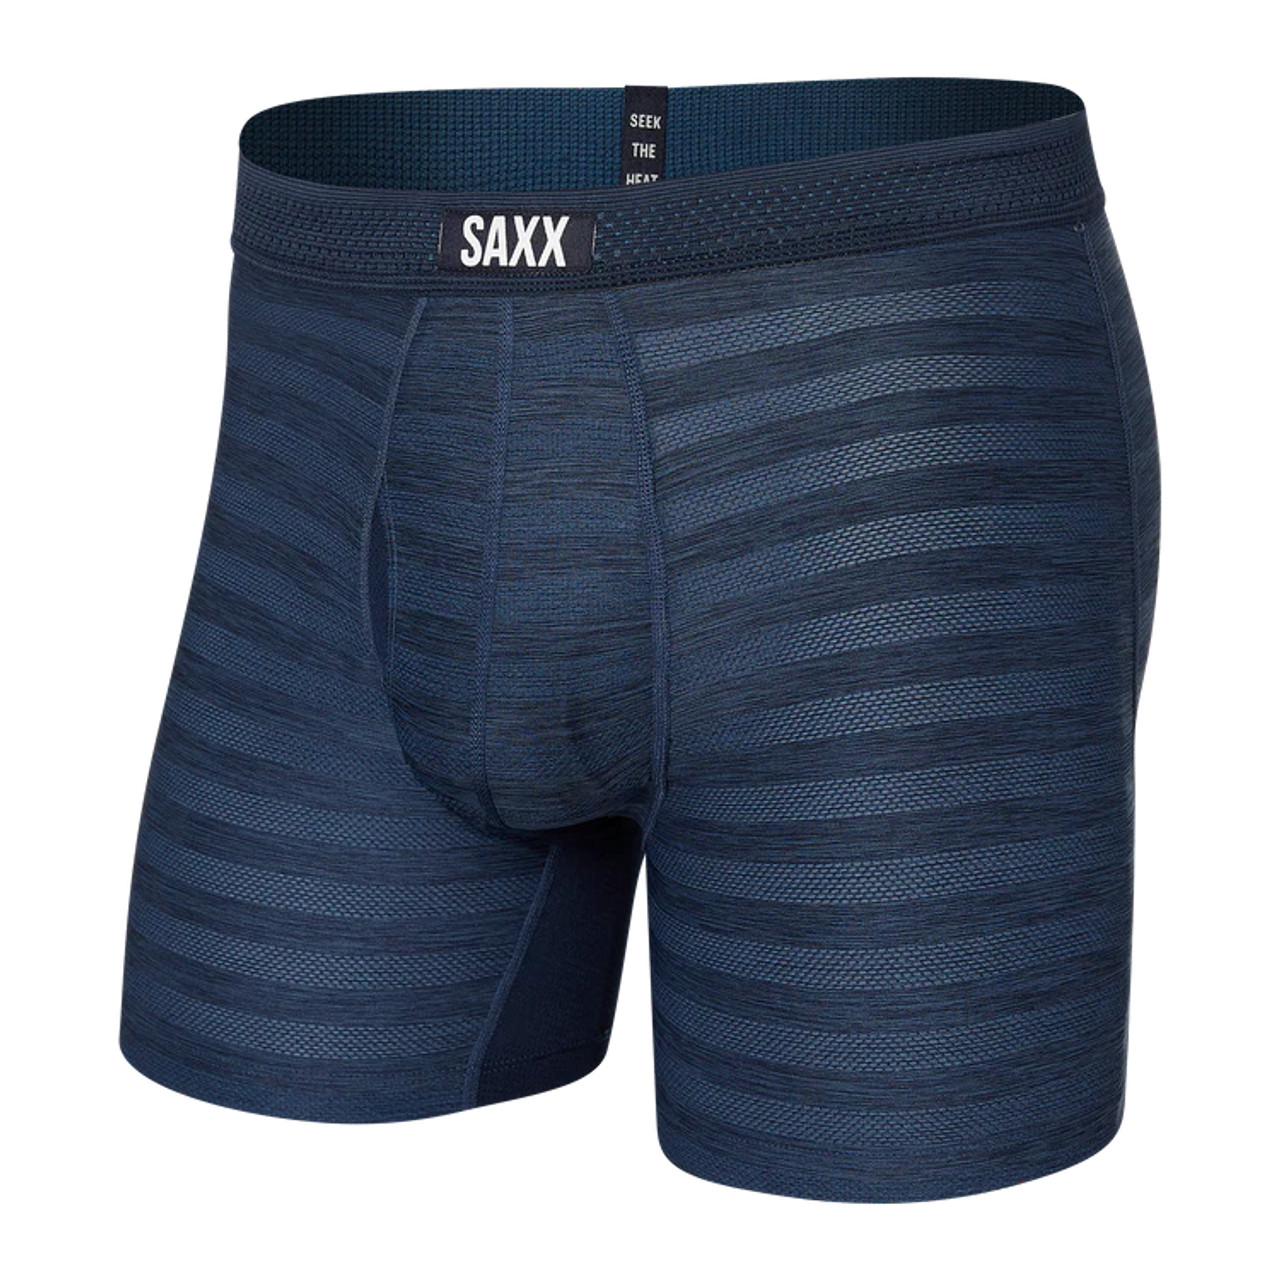 Saxx DropTemp Cooling Cotton Boxer Brief: Cool Muu Muu - Multi